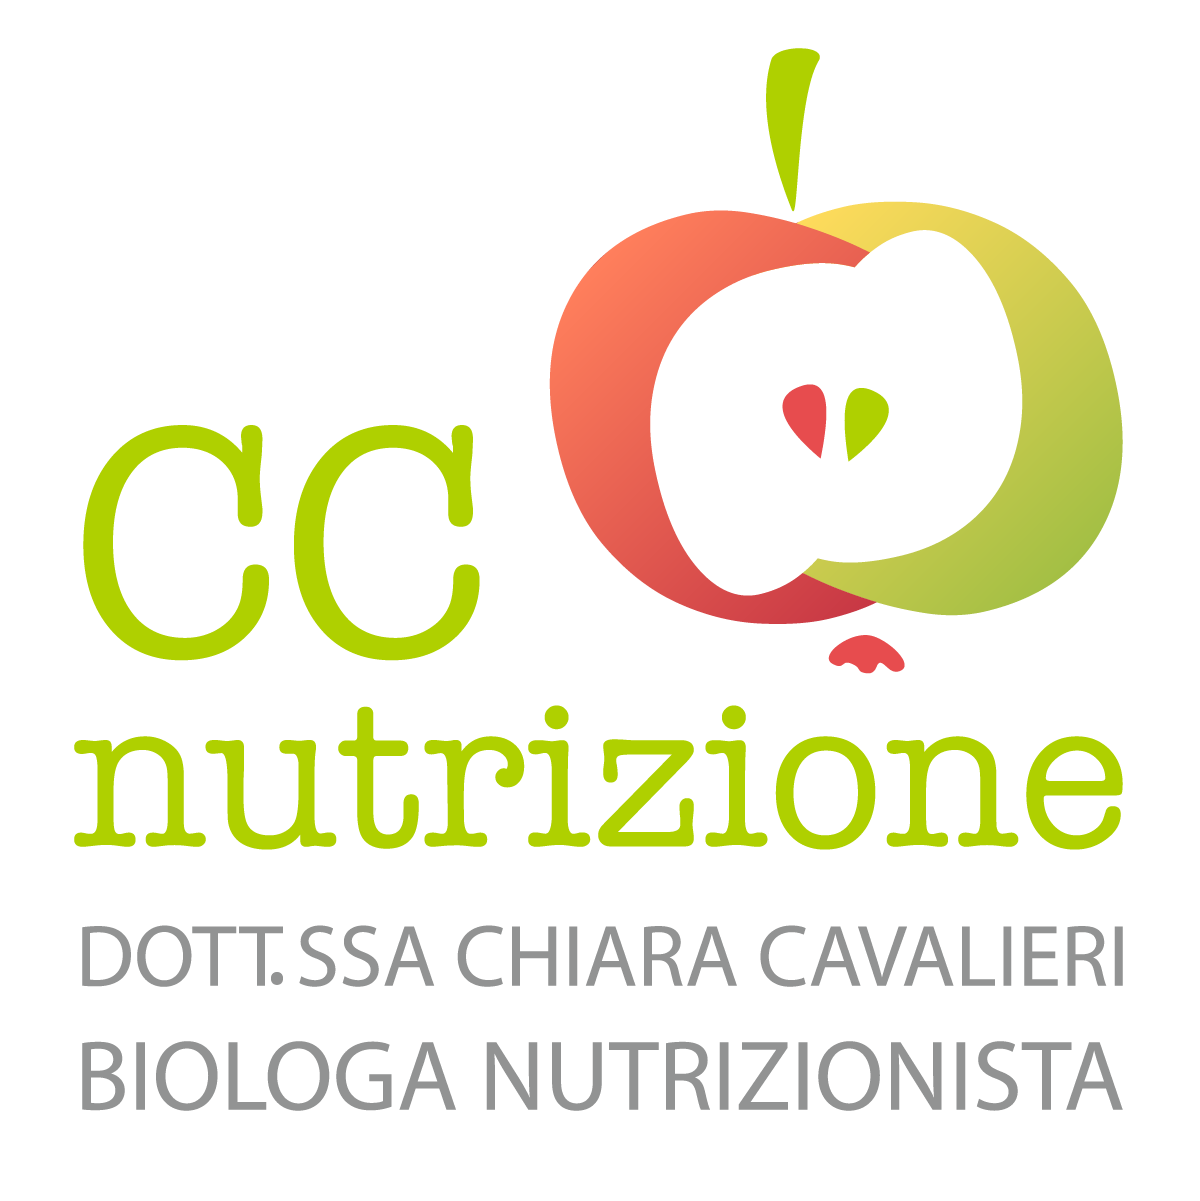 CC Nutrizione